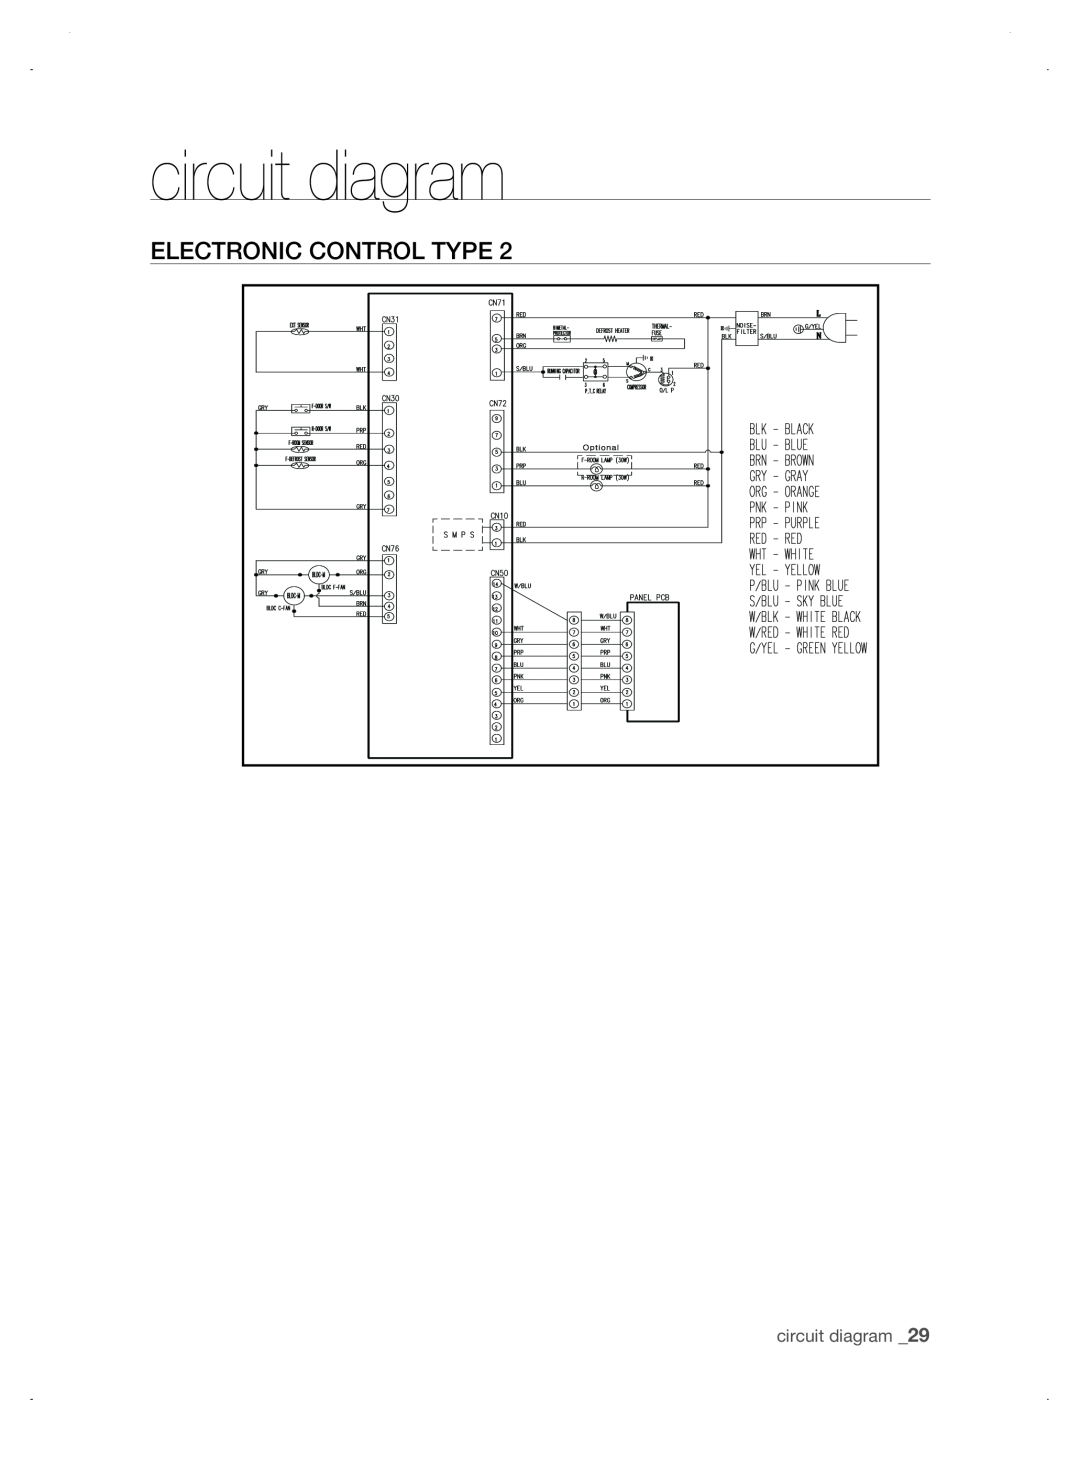 Samsung DA99-01906A user manual ELECtroniC ControL tyPE, circuit diagram 